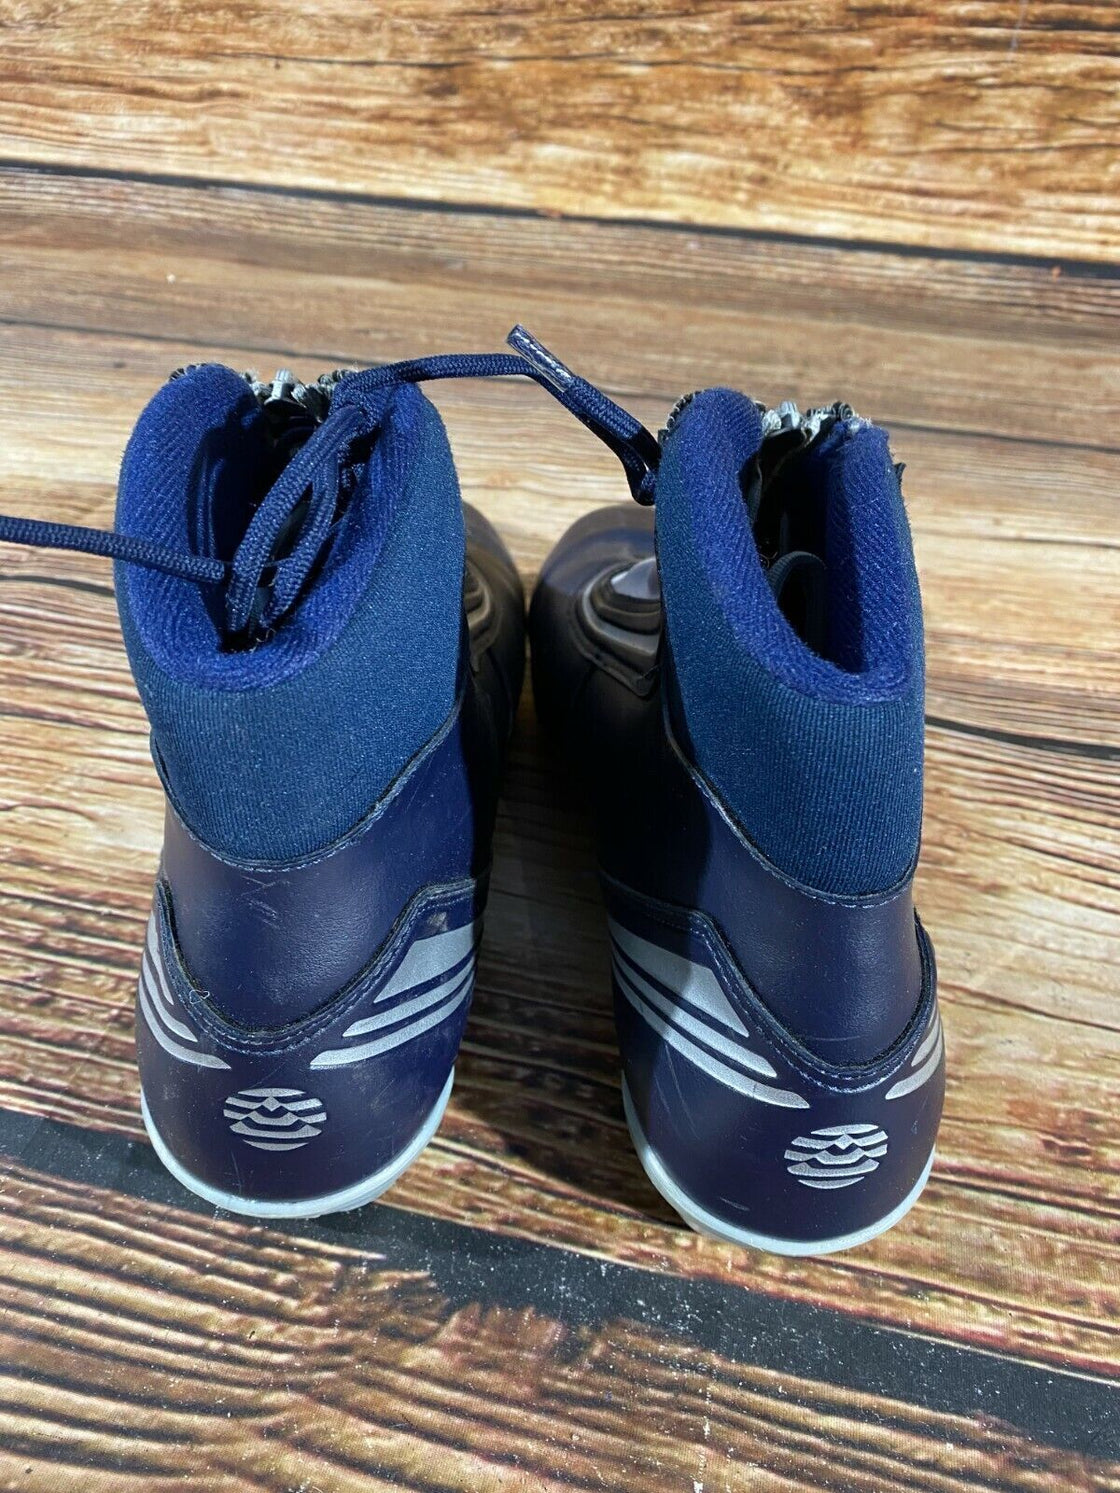 Alpina ST10 Nordic Cross Country Ski Boots Size EU46 US12 NNN bindings